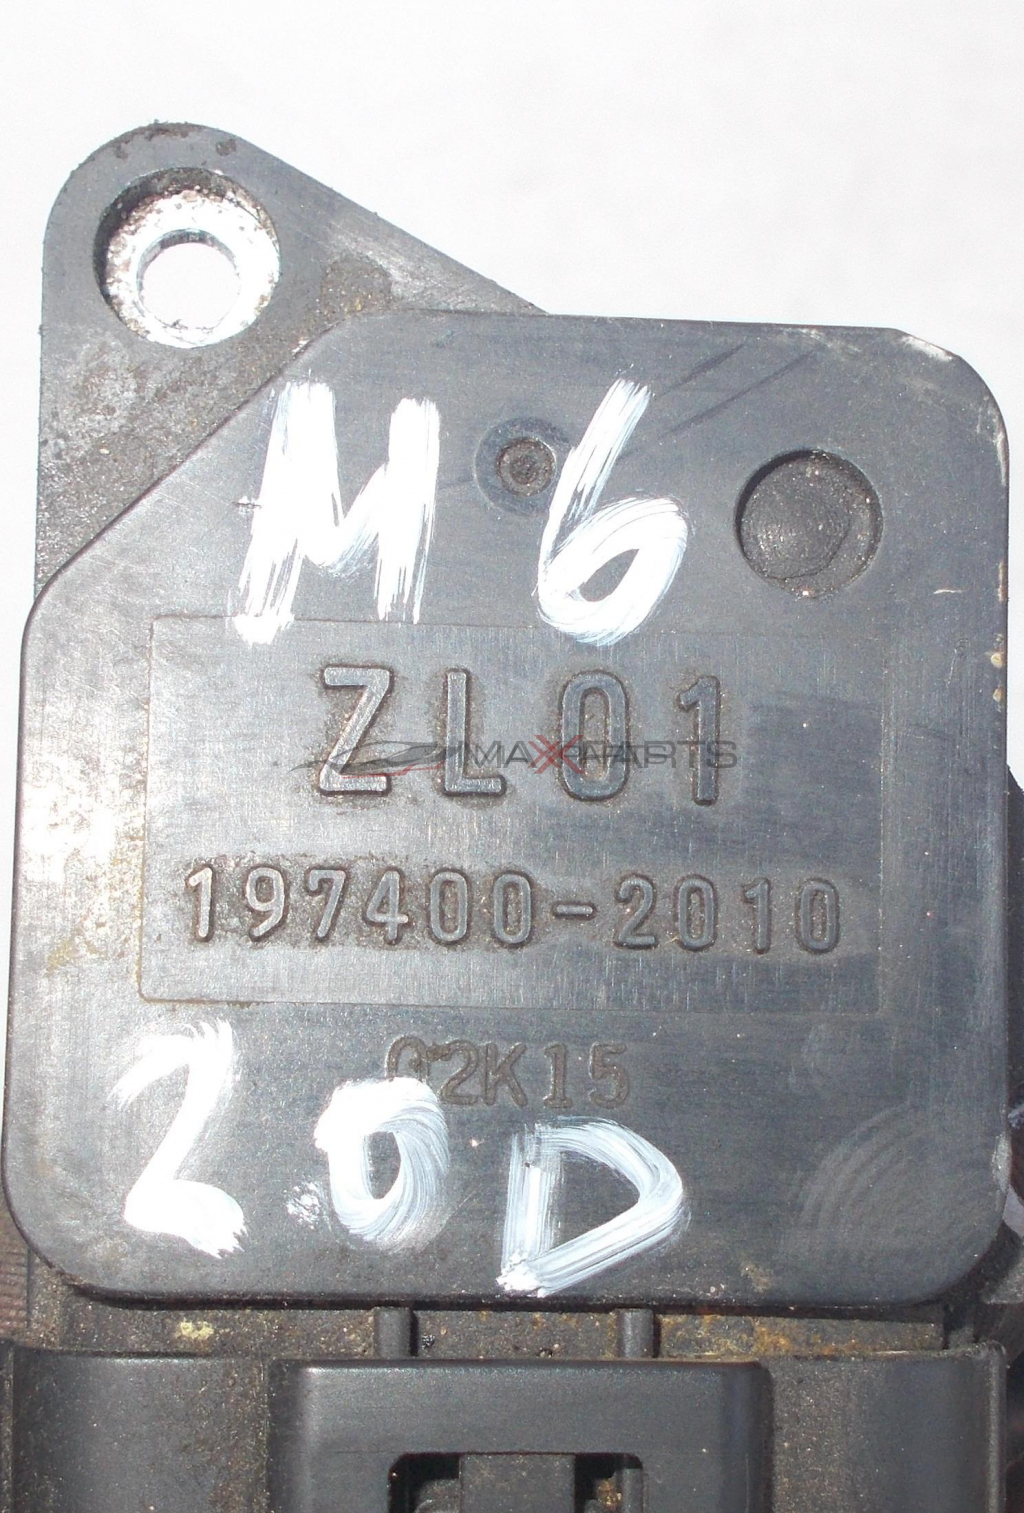 Дебитомер за Mazda 6 2.0D AIR FLOW METER 197400-2010 1974002010